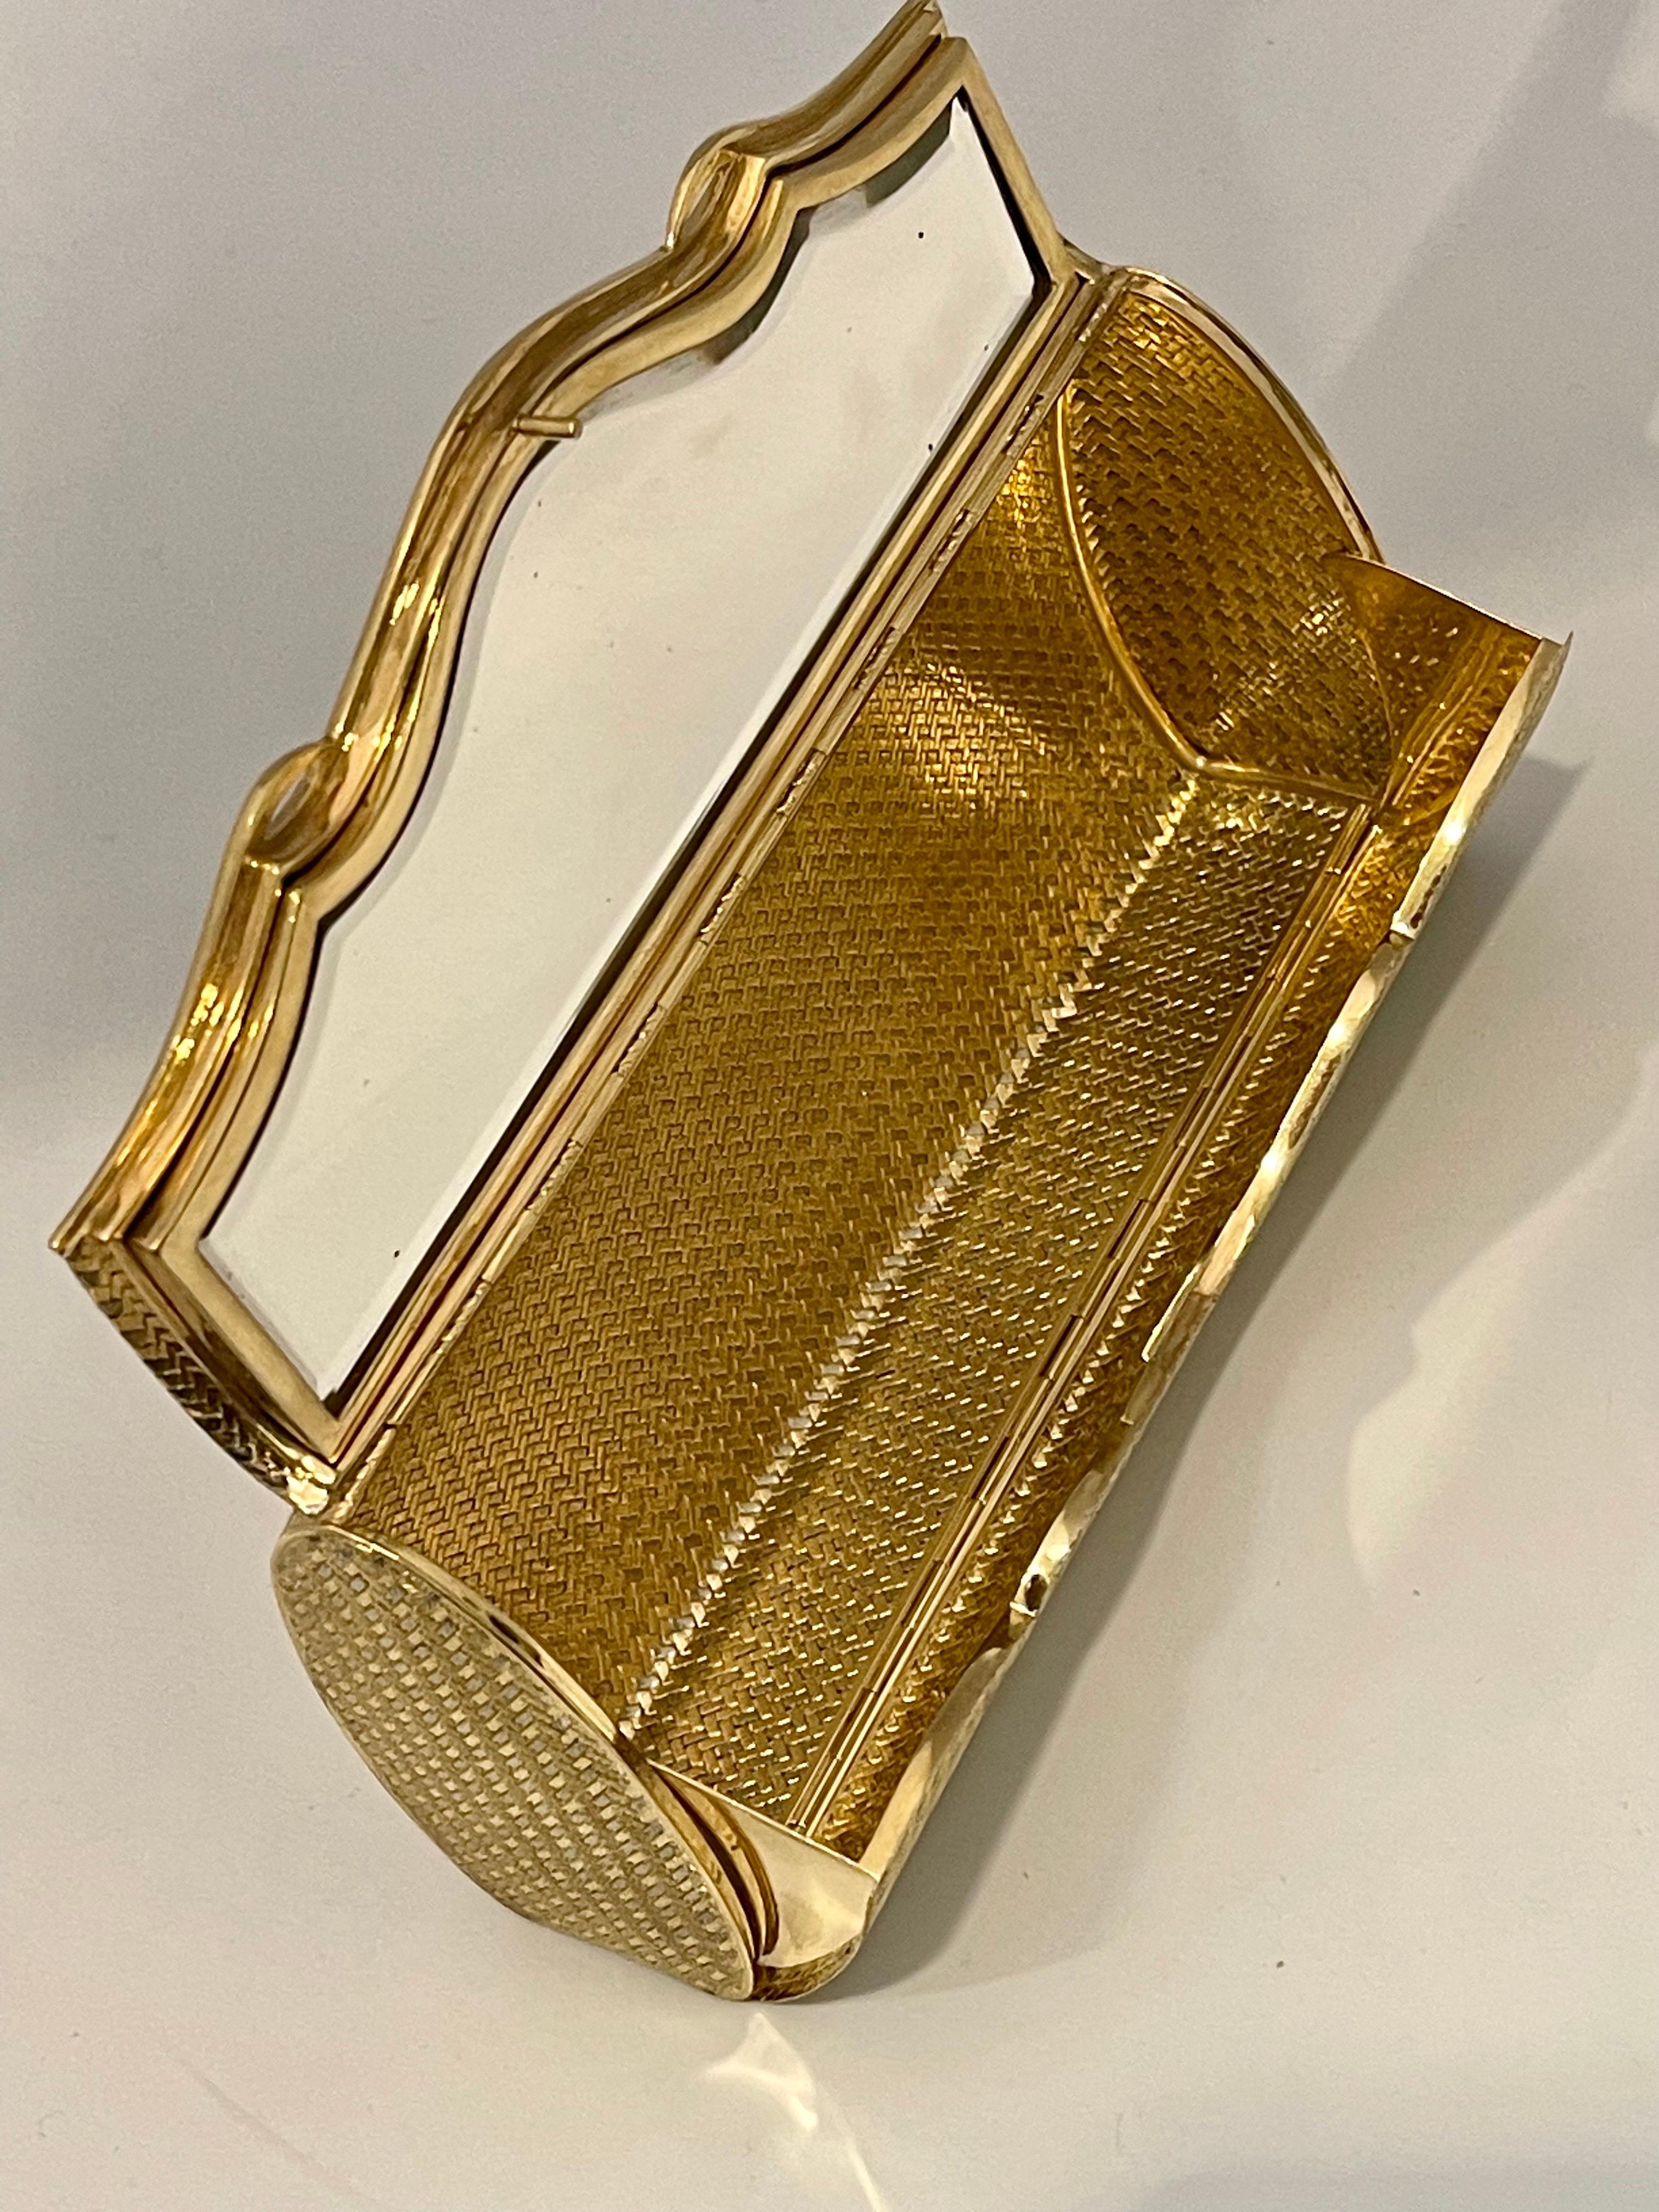 Van Cleef & Arpels 18K Yellow Gold Mesh Clutch Handbag with Mirror Inside, Rare For Sale 1